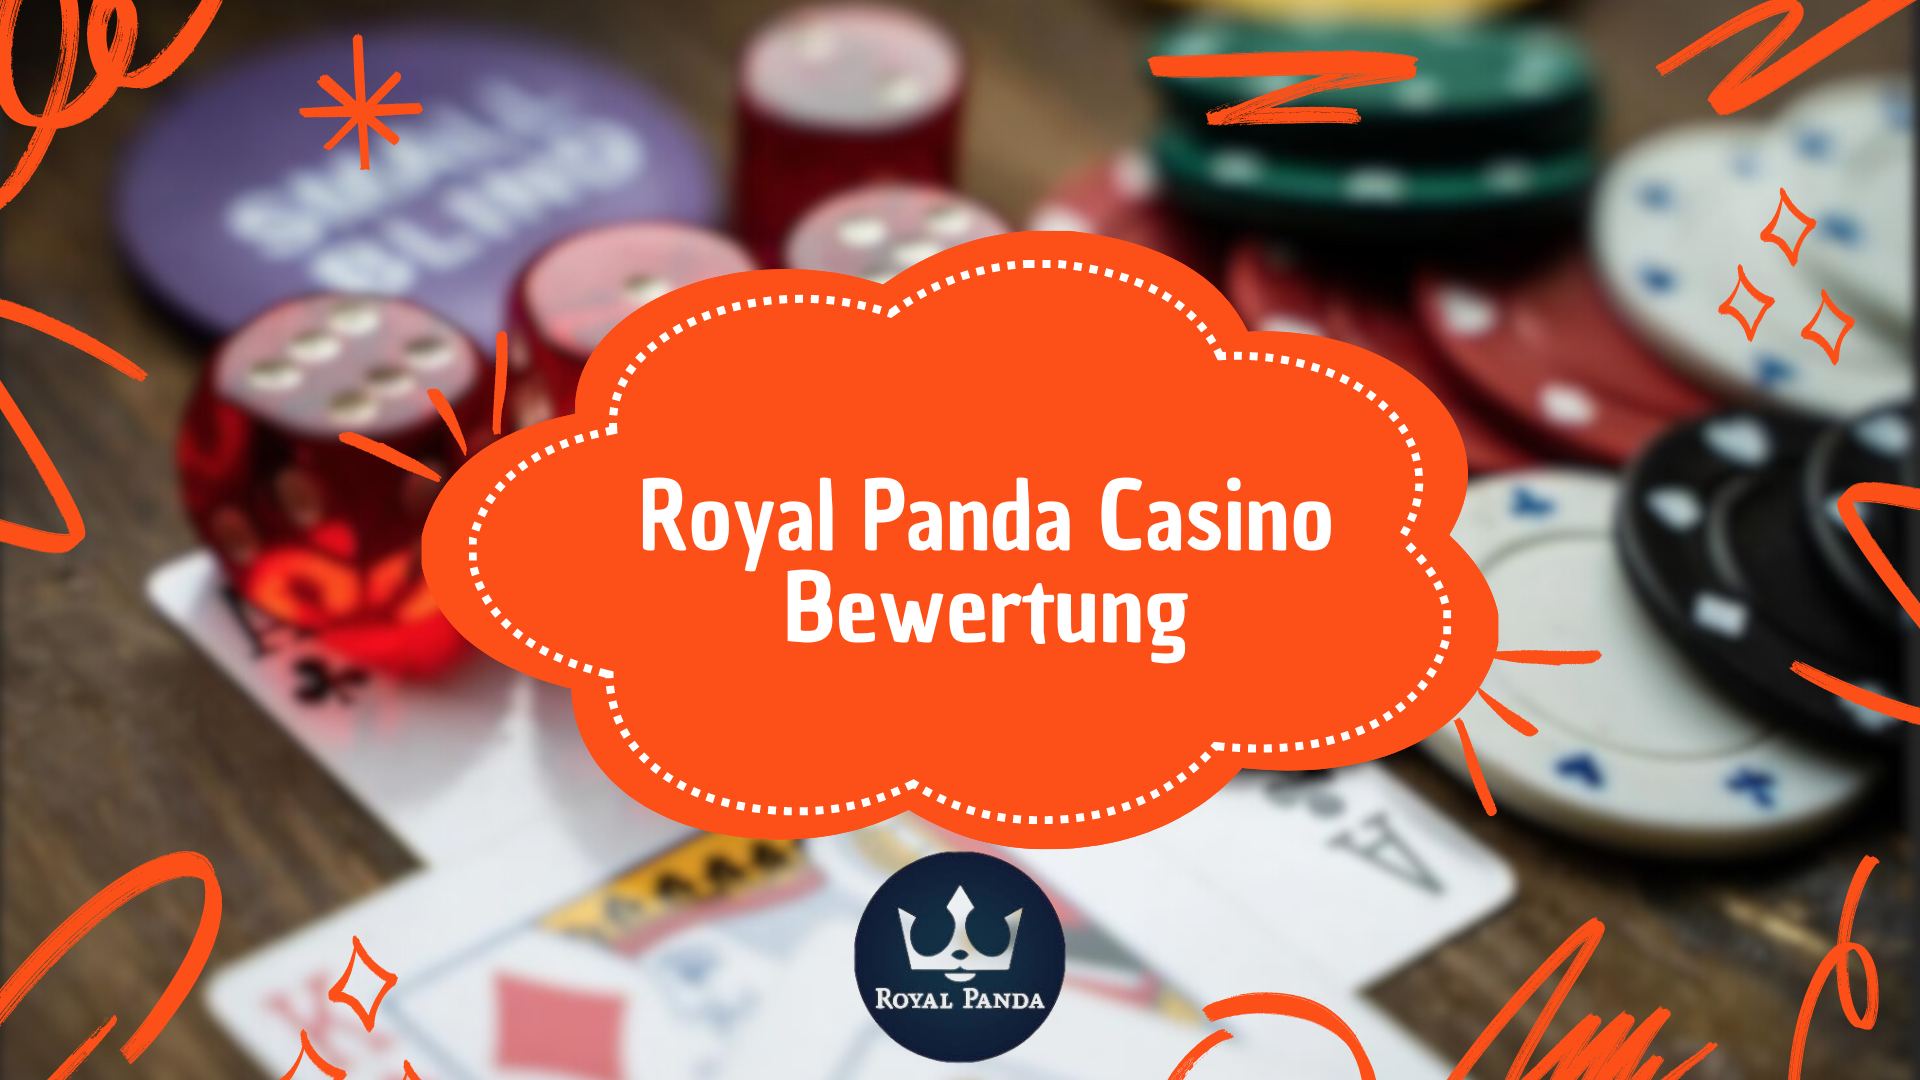 Royal Panda Casino Bewertung